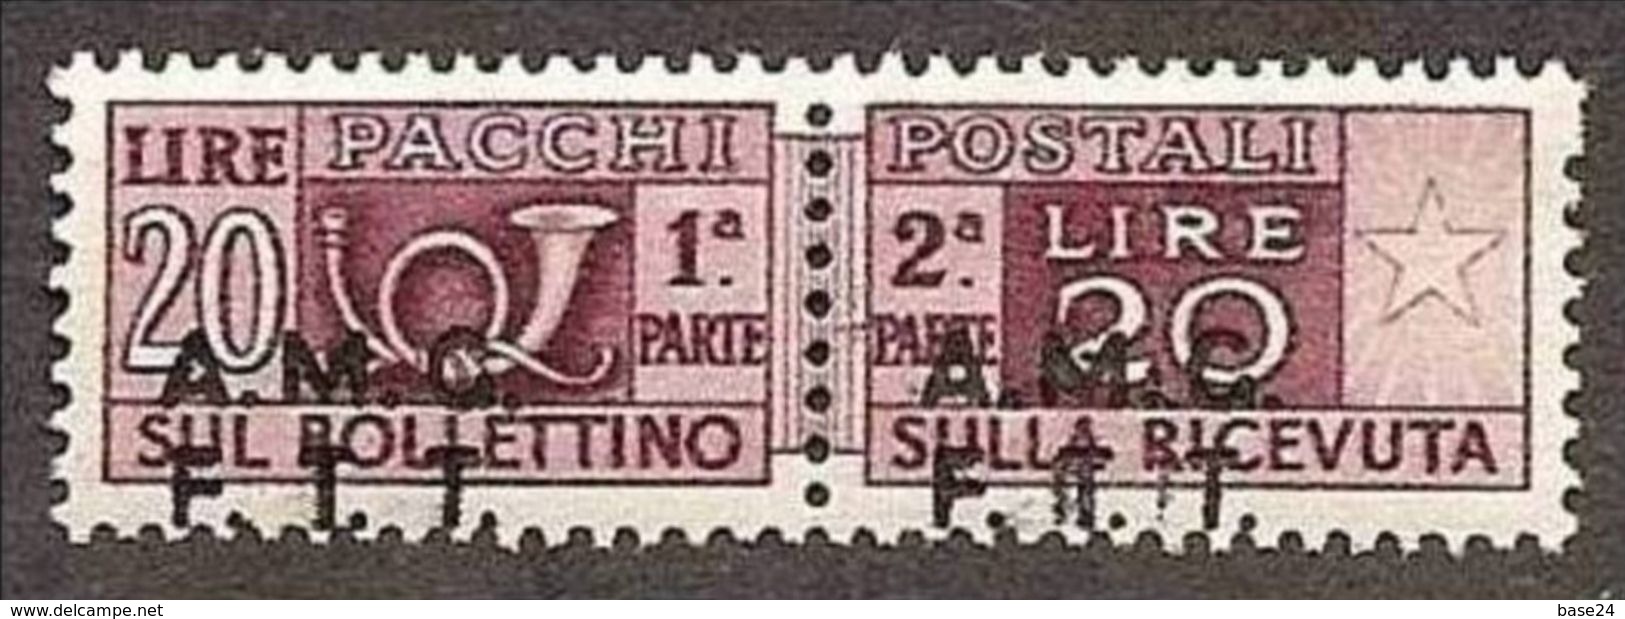 1947 Italia Italy Trieste A  PACCHI POSTALI 20 Lire Bruno Lilla Varietà 7g MNH** Firm.Biondi Parcel Post - Paketmarken/Konzessionen